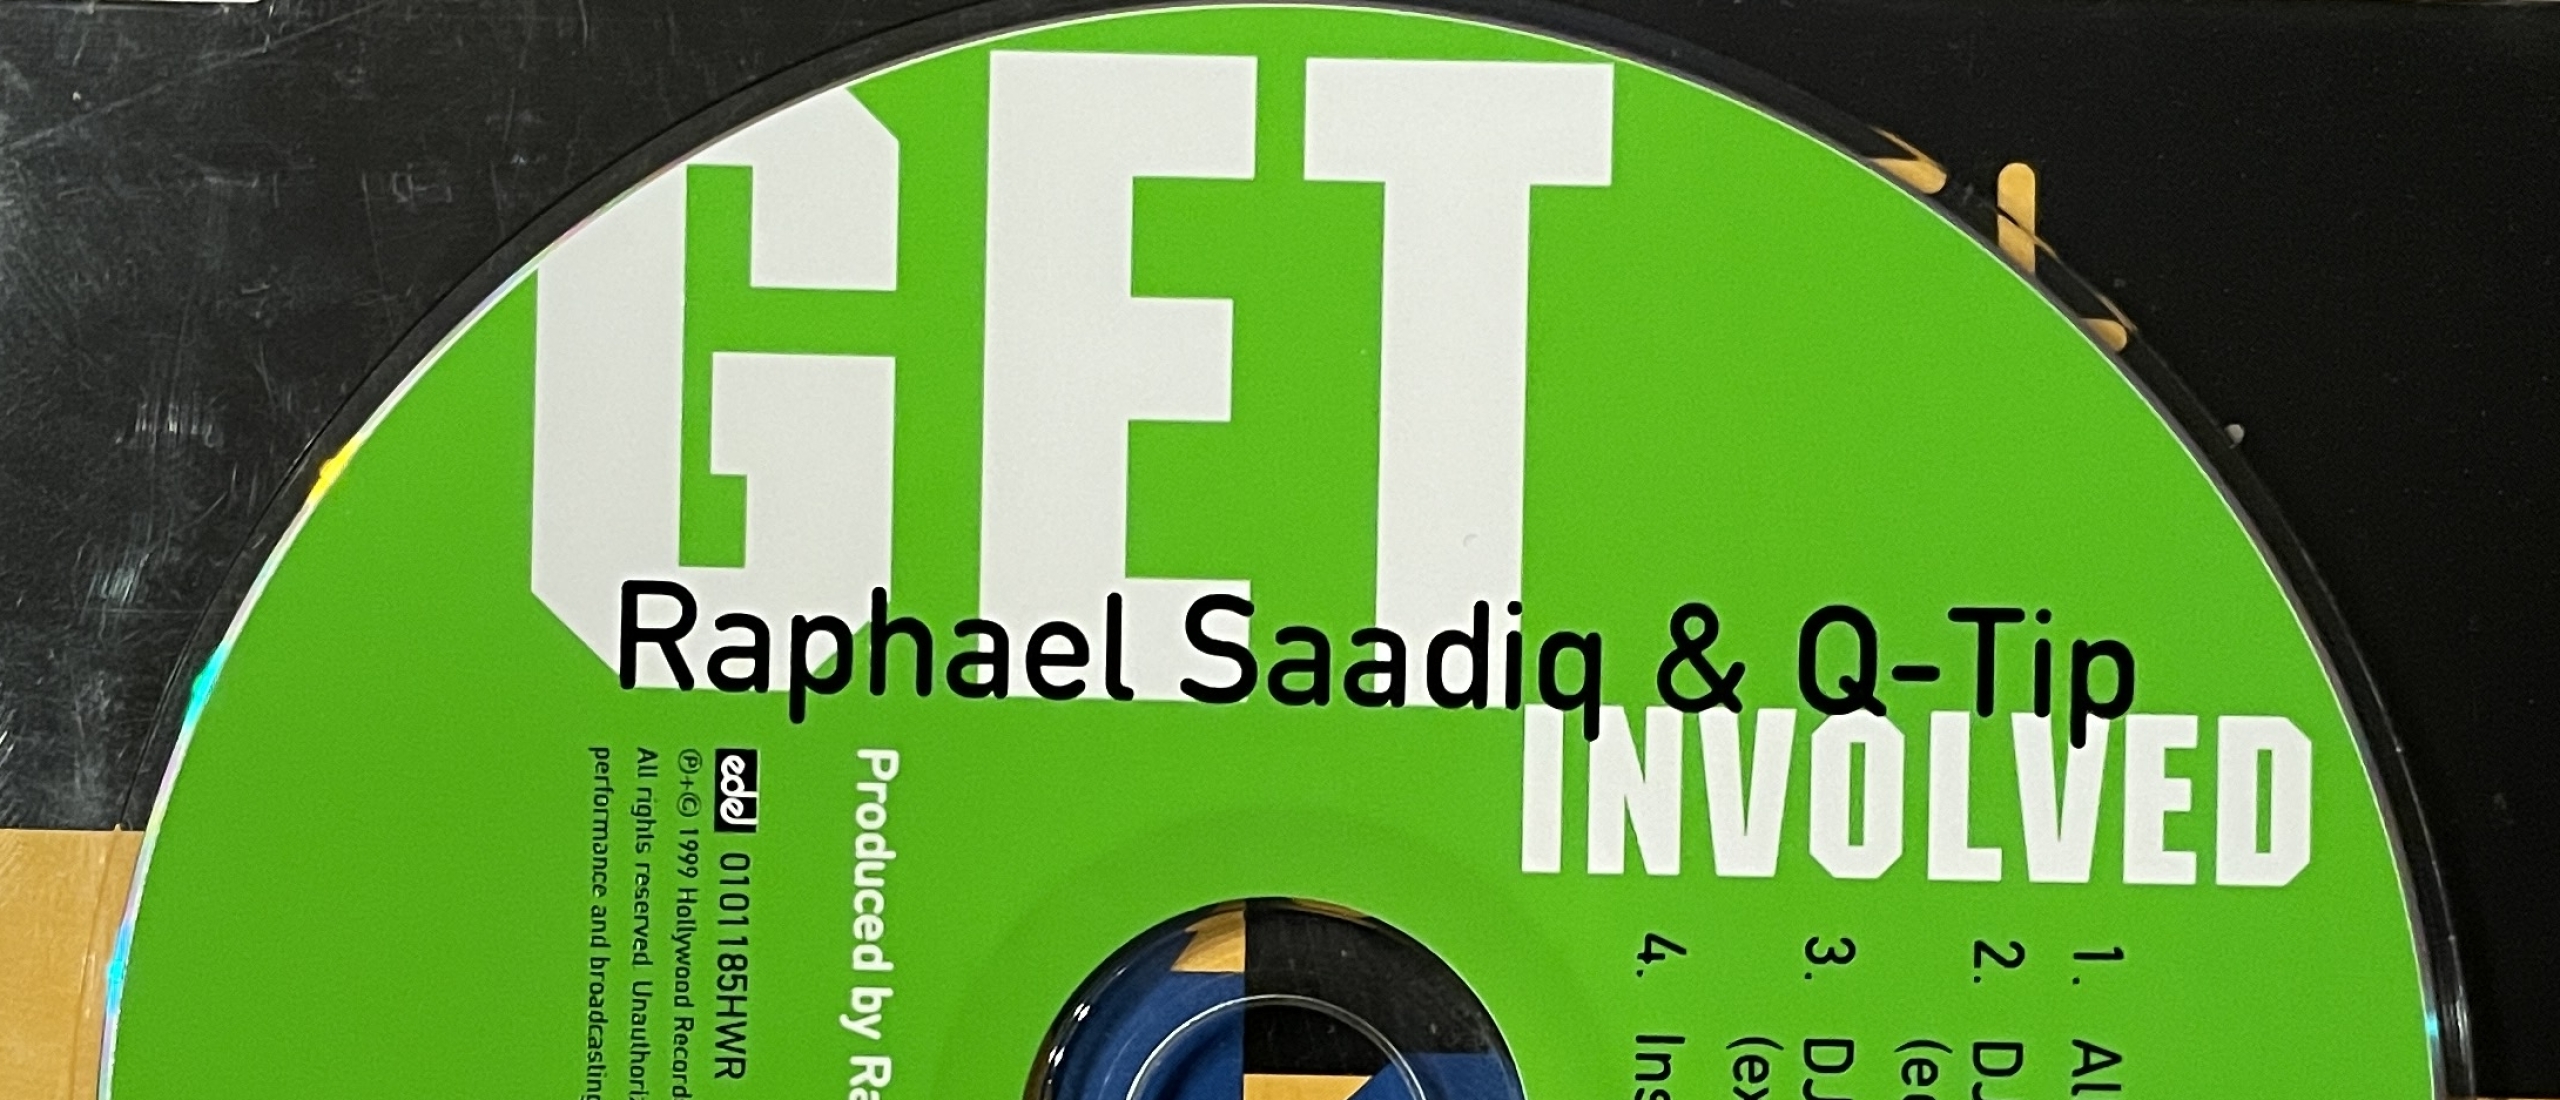 Forgotten song Friday Get Involved van Raphael Saadiq and Q-Tip